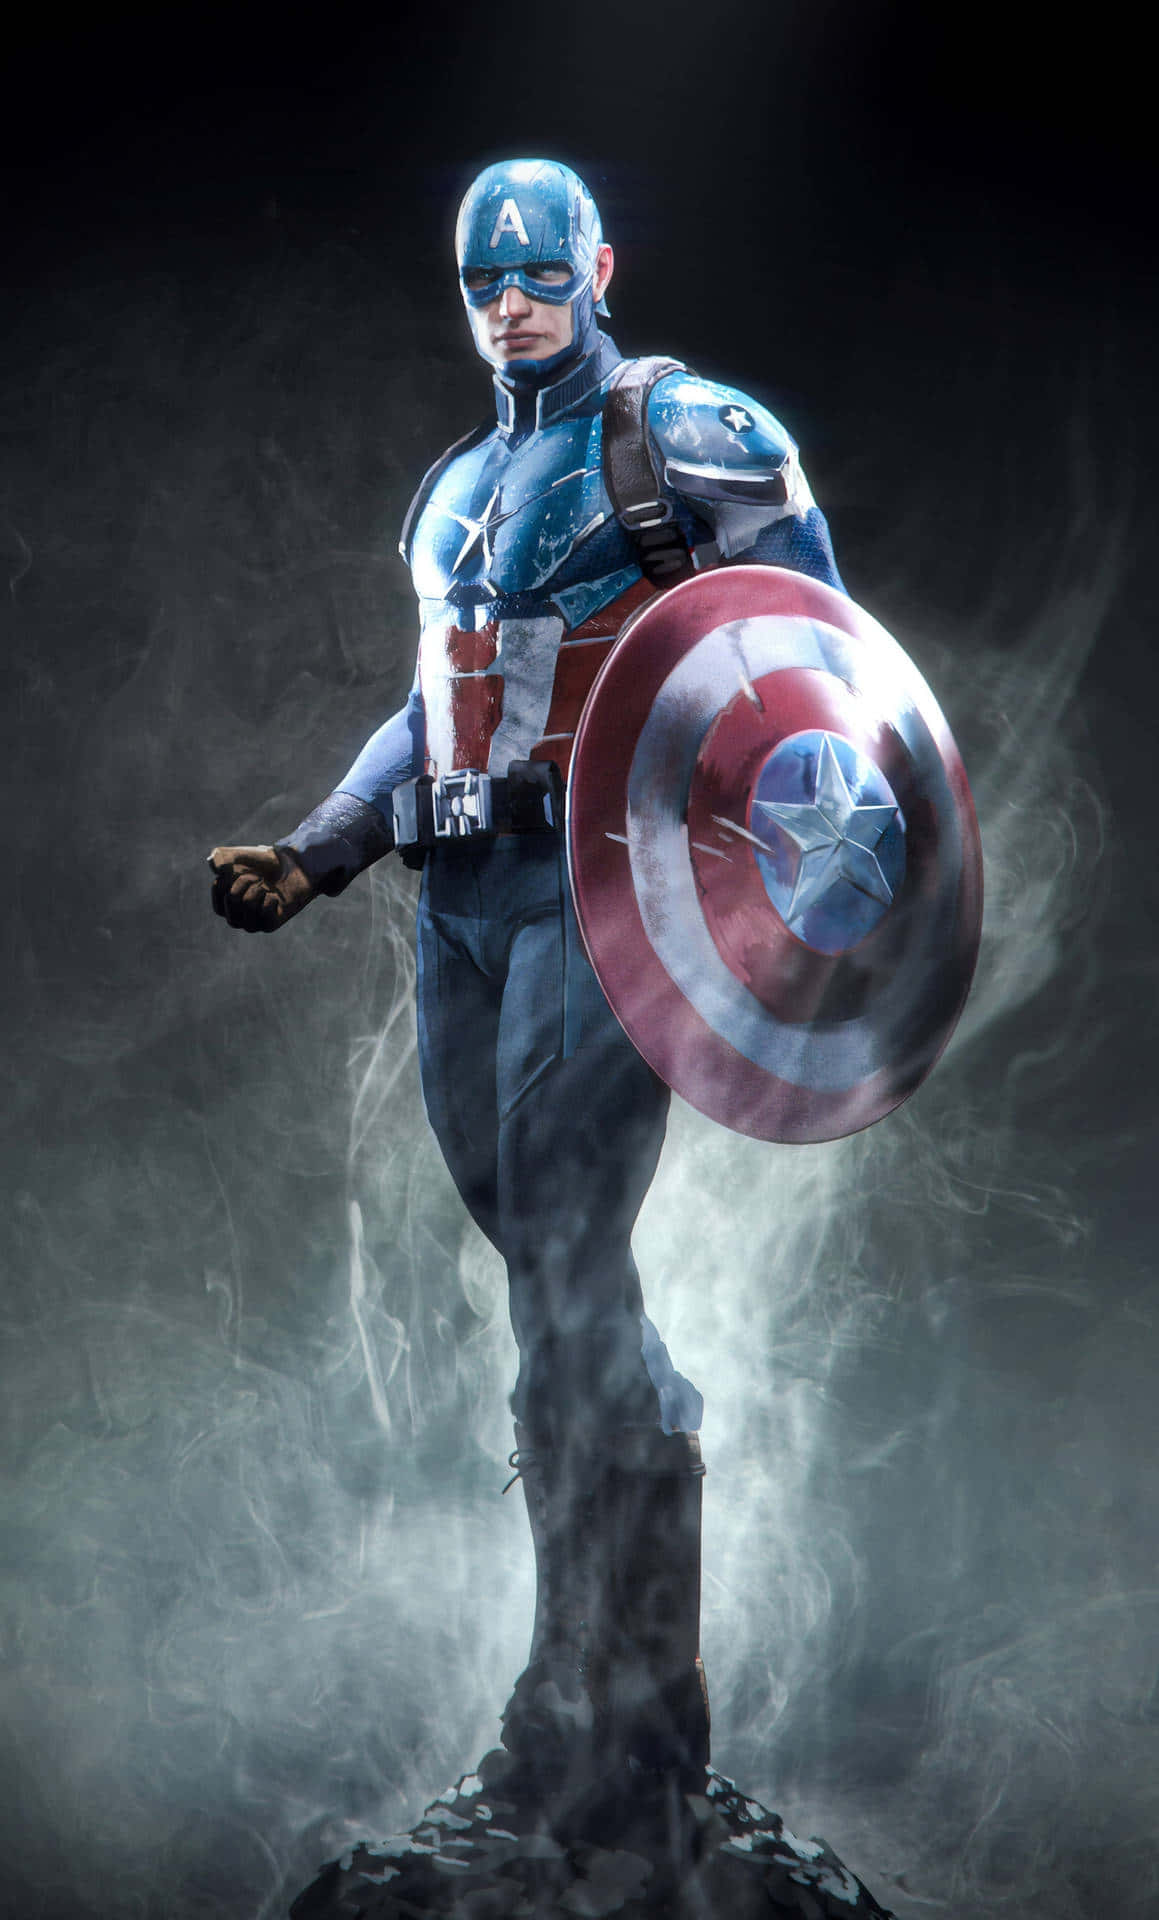 Captain America Standing Heroic Pose Wallpaper